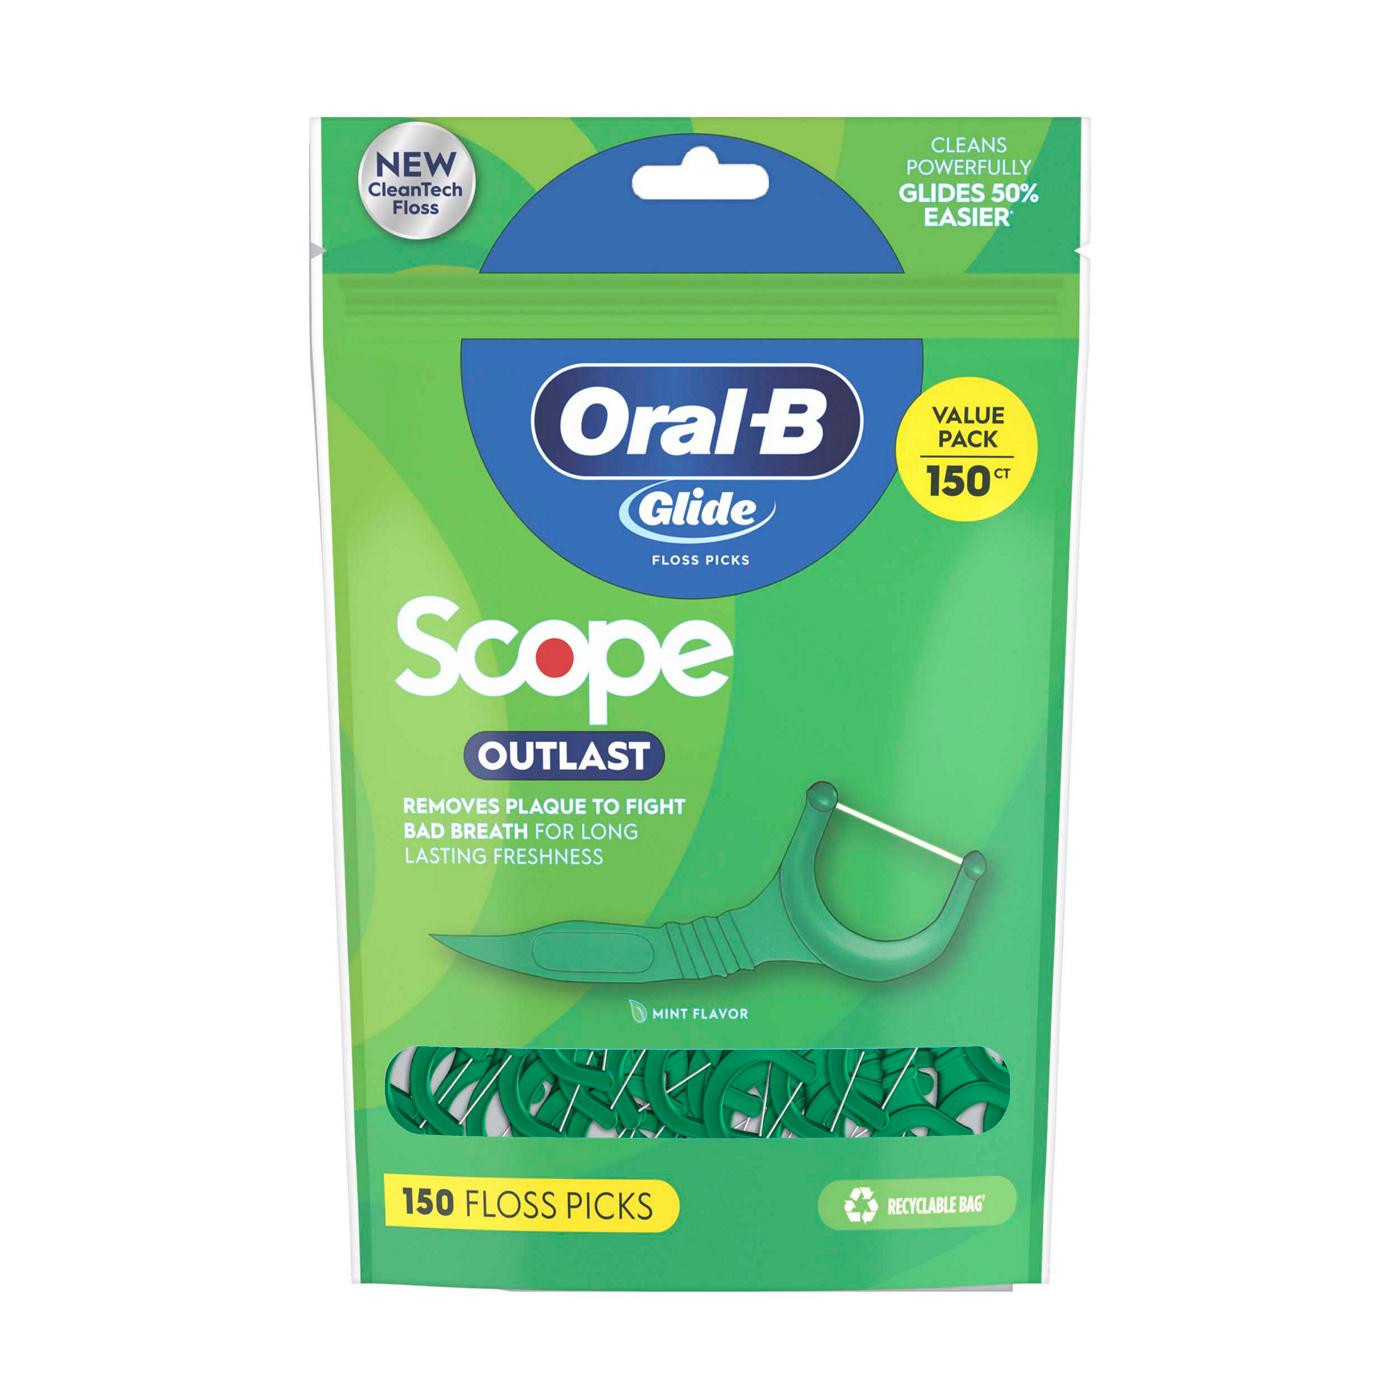 Oral-B Glide +Scope Outlast Dental Floss Picks - Mint; image 1 of 8